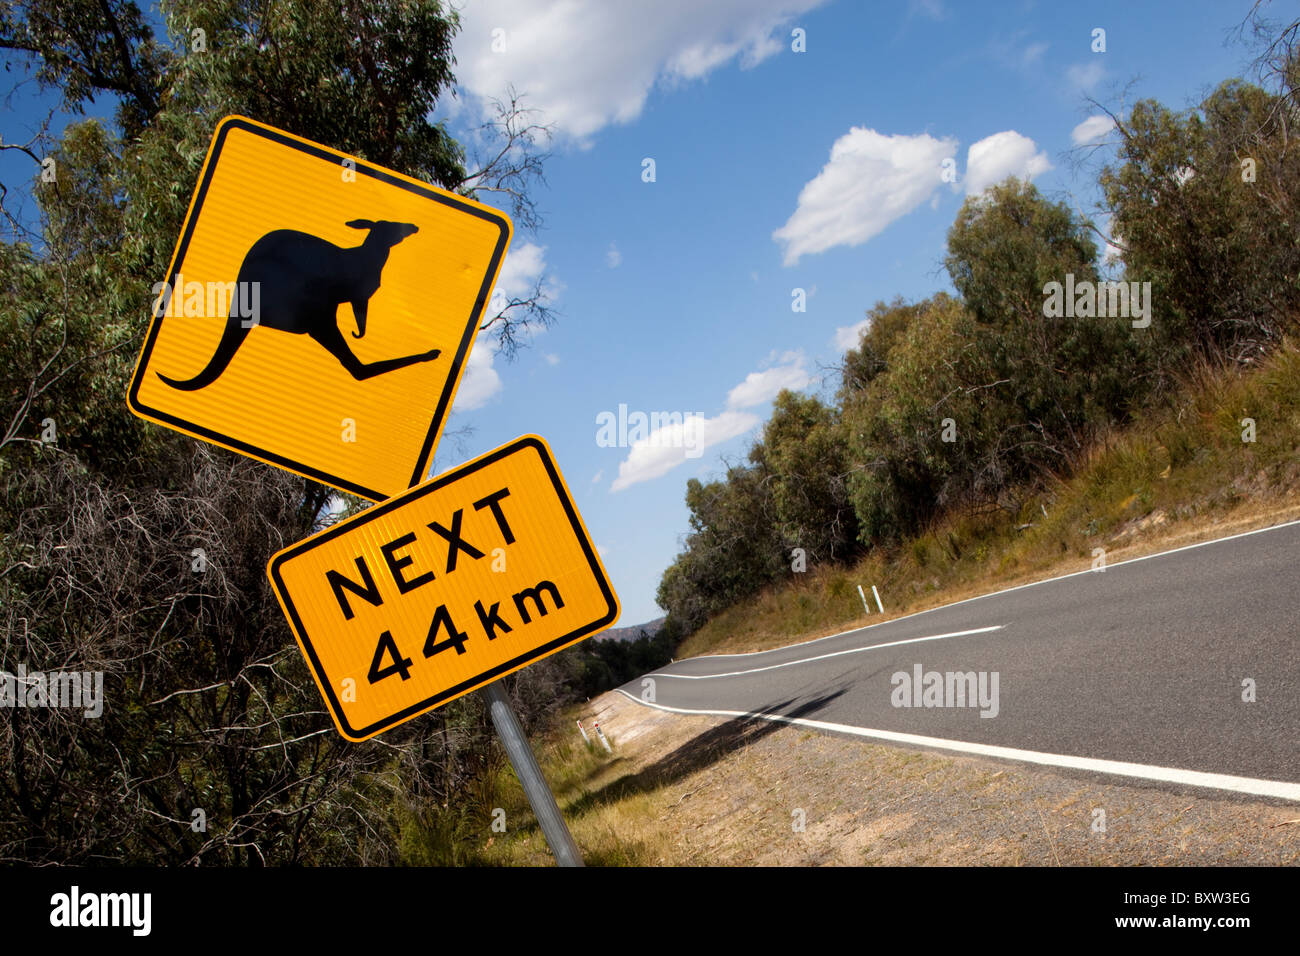 Australia, Victoria, Grampians National Park, Kangaroo Crossing road warning sign along rural road Stock Photo